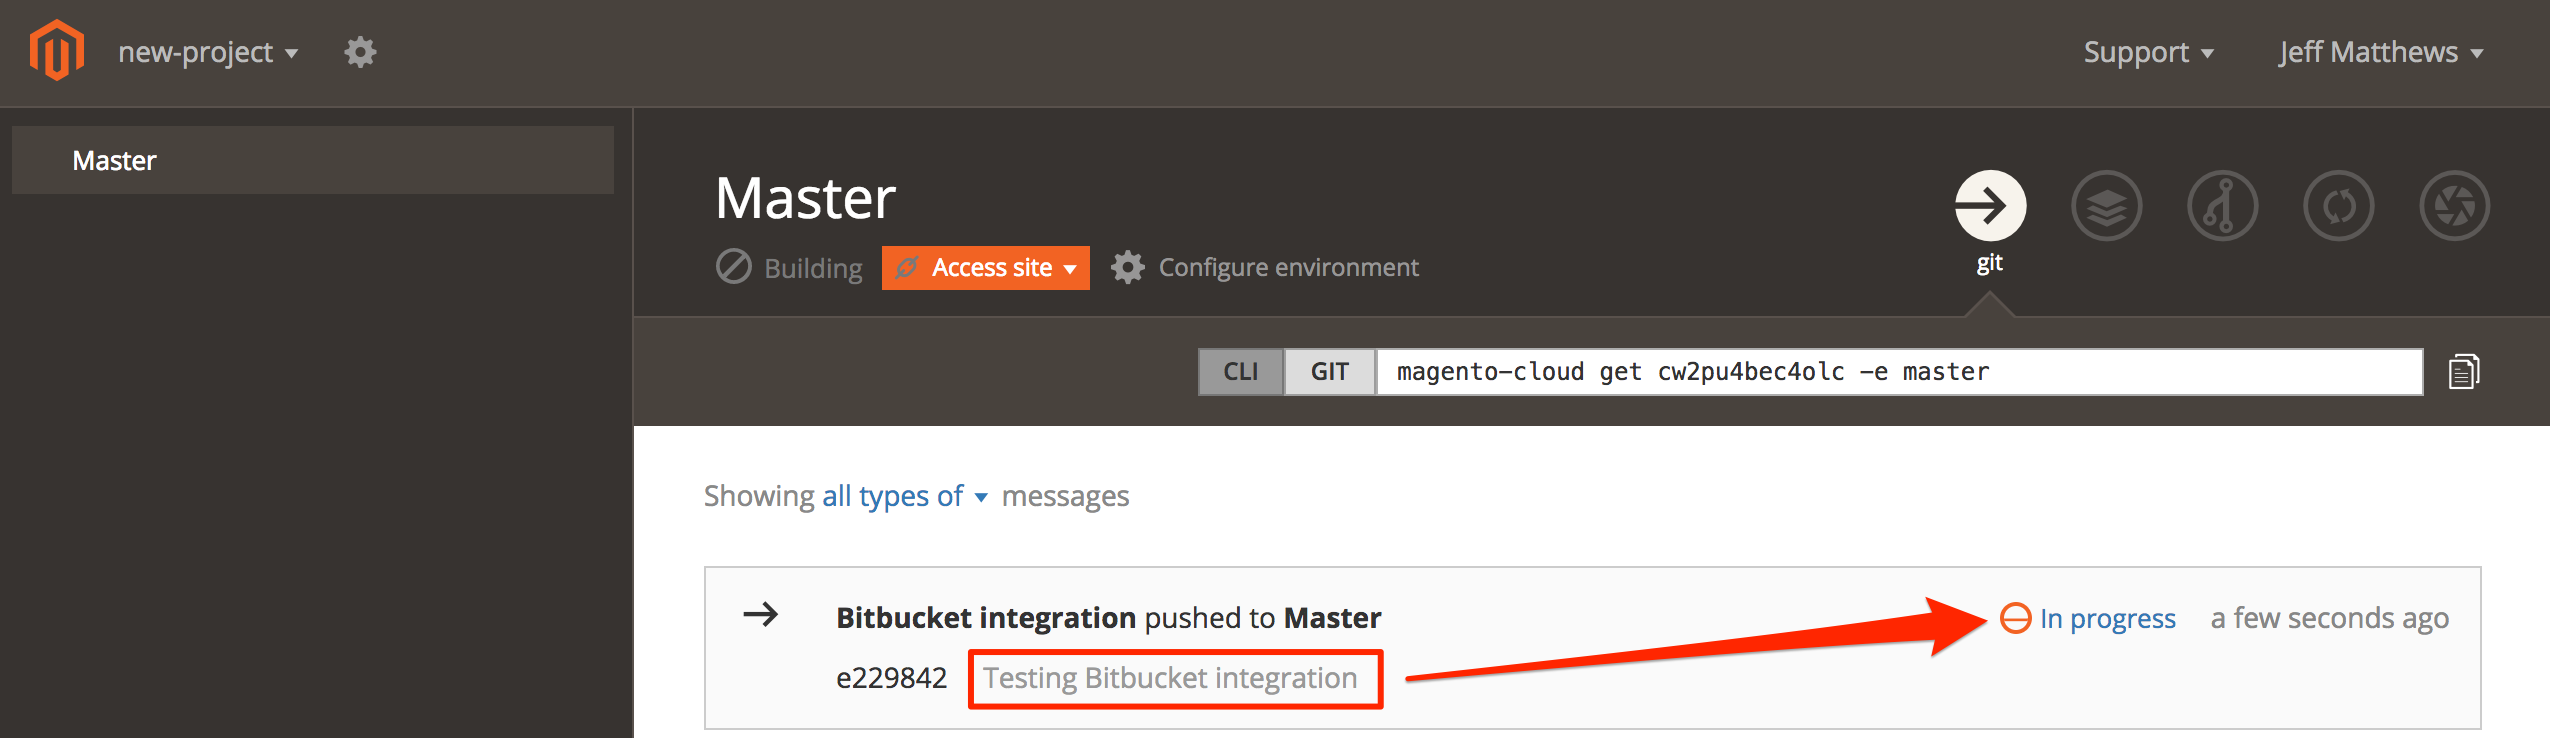 Testing the Bitbucket integration